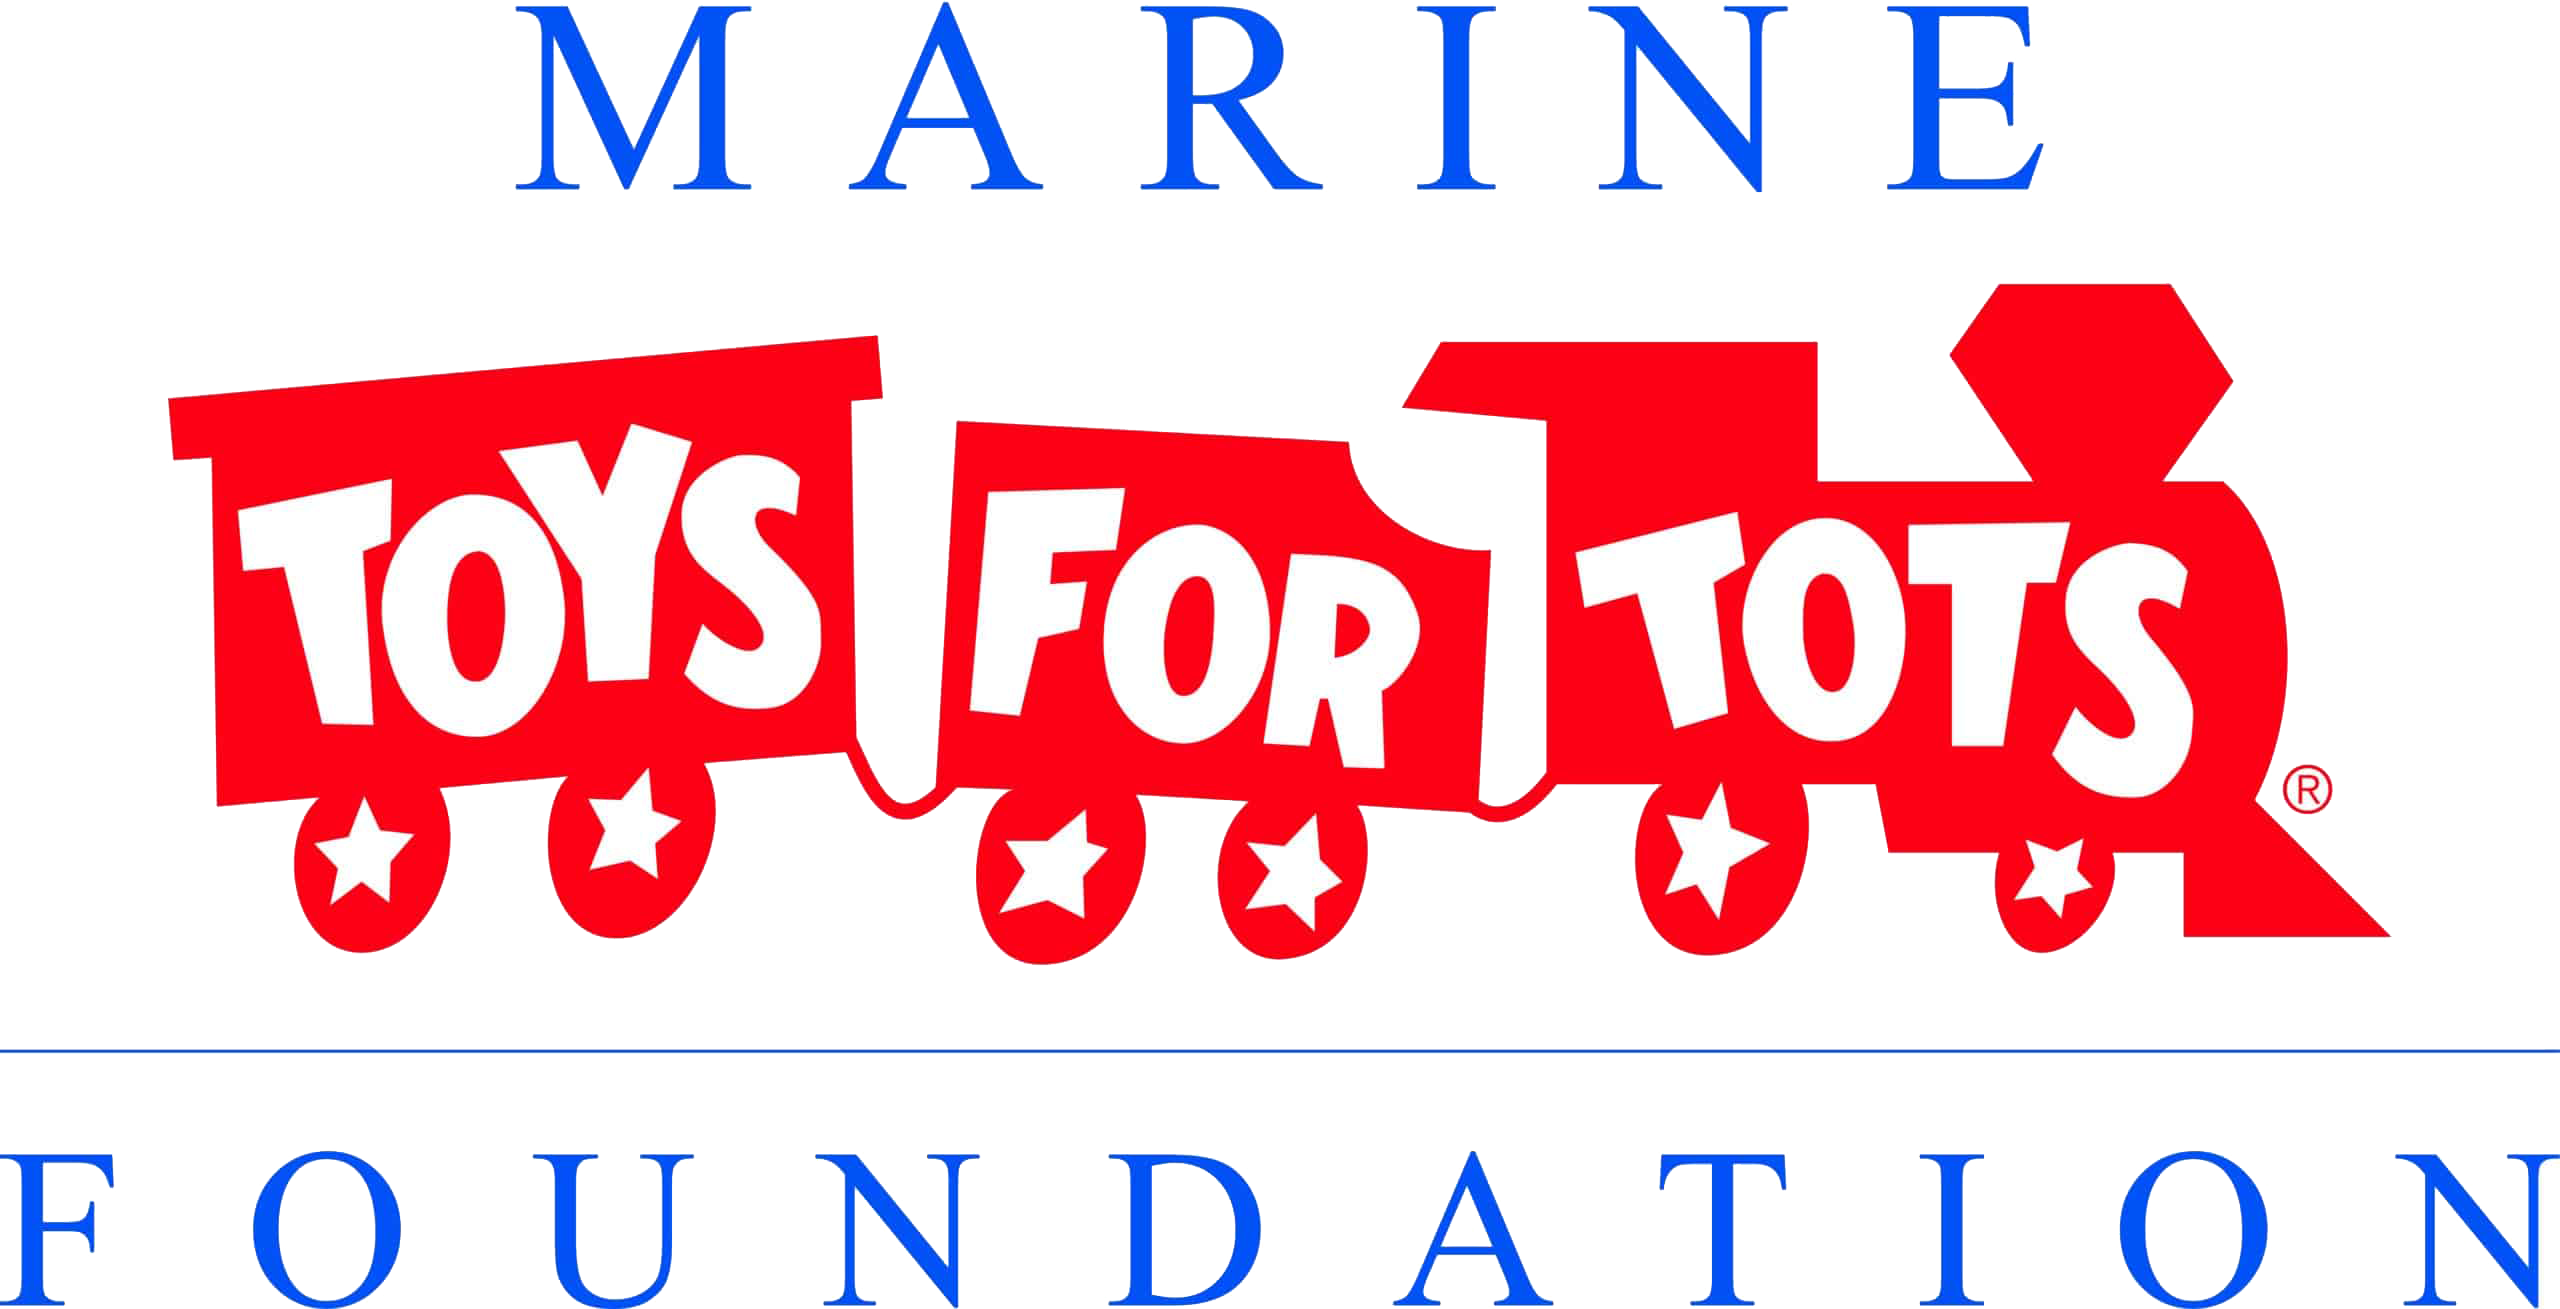 Marine Toys For Tots Foundation Logo